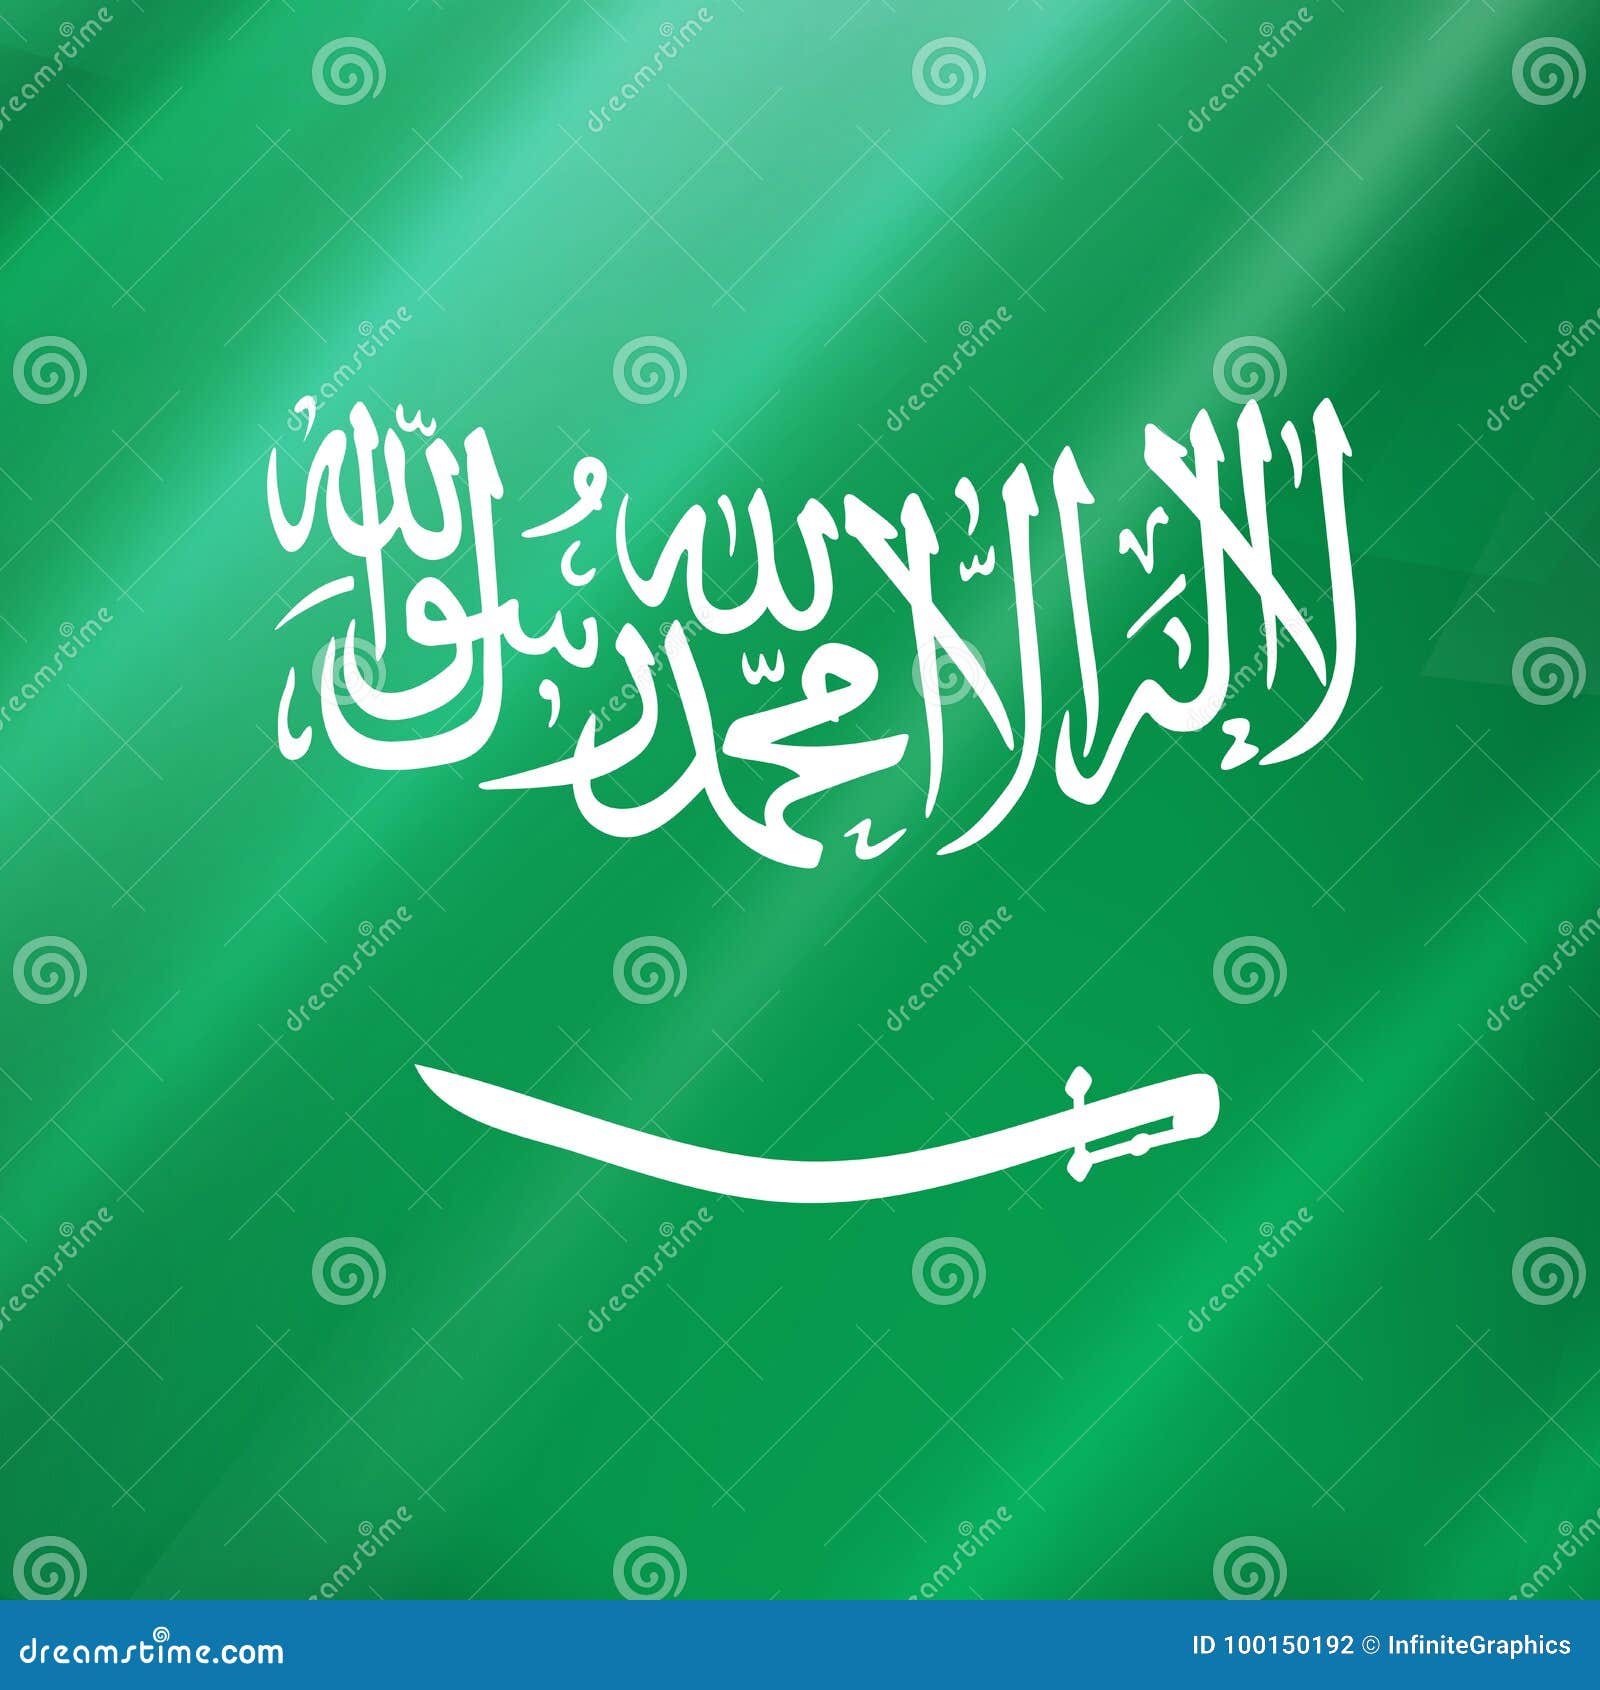 Illustration of Saudi Arabia National Day Background Stock Vector ...